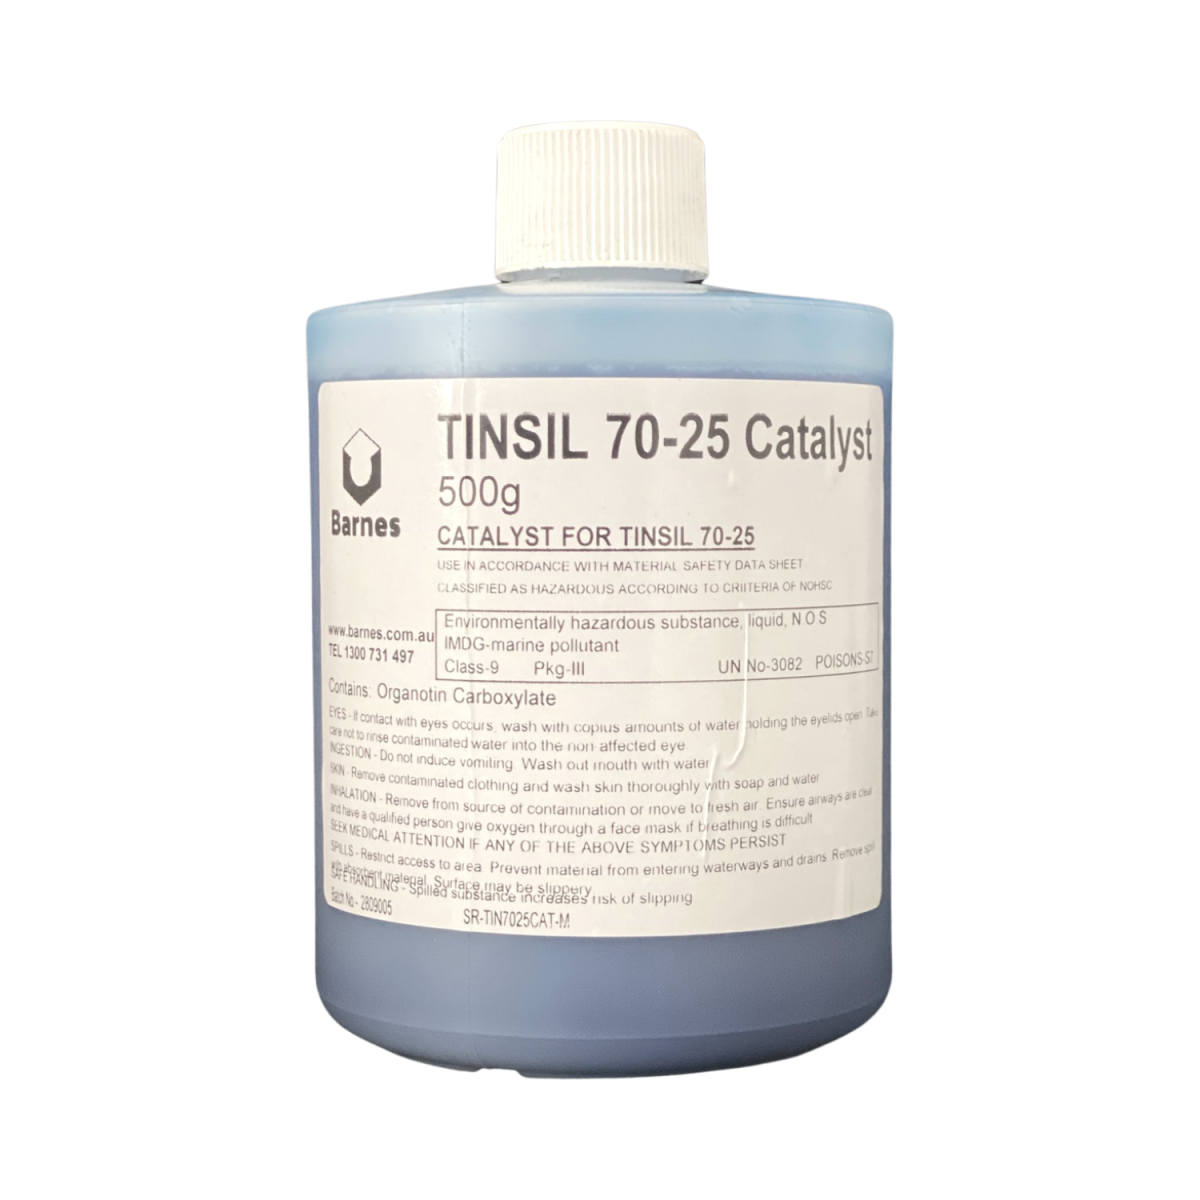 TinSil 70-25 Catalyst